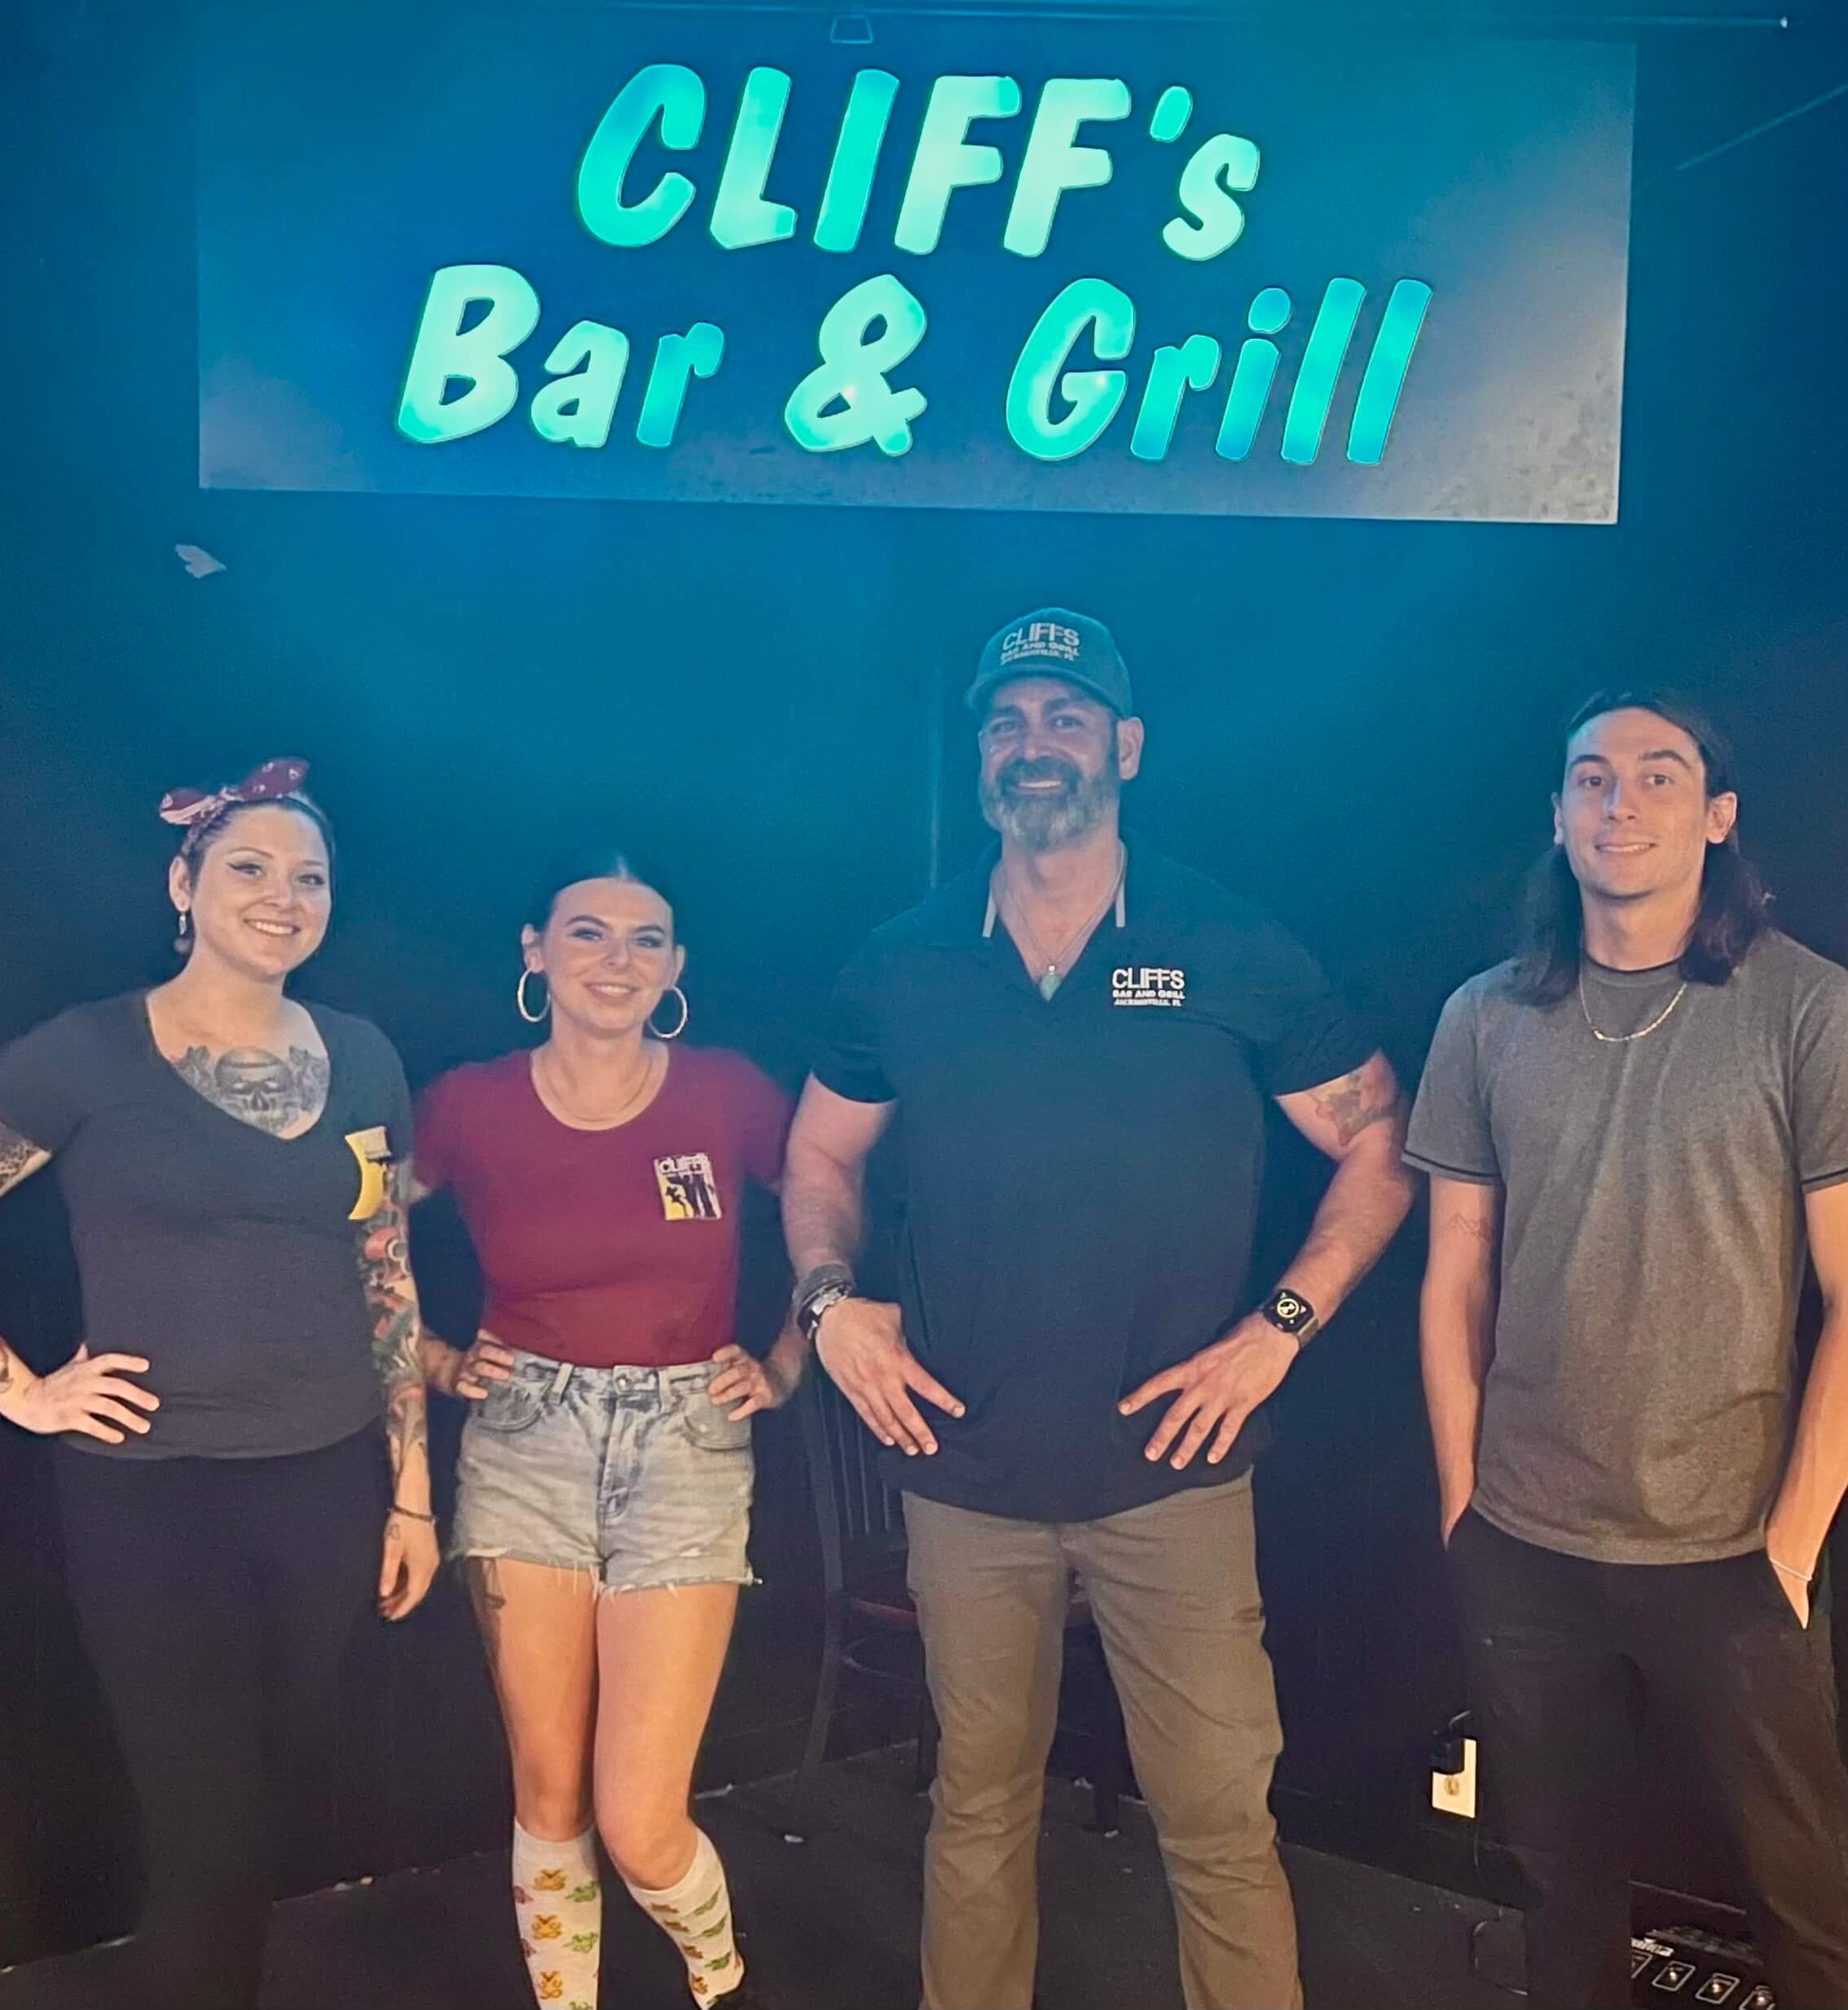 Cliff's Bar & Grill Jacksonville FL 32225 trivia night 7